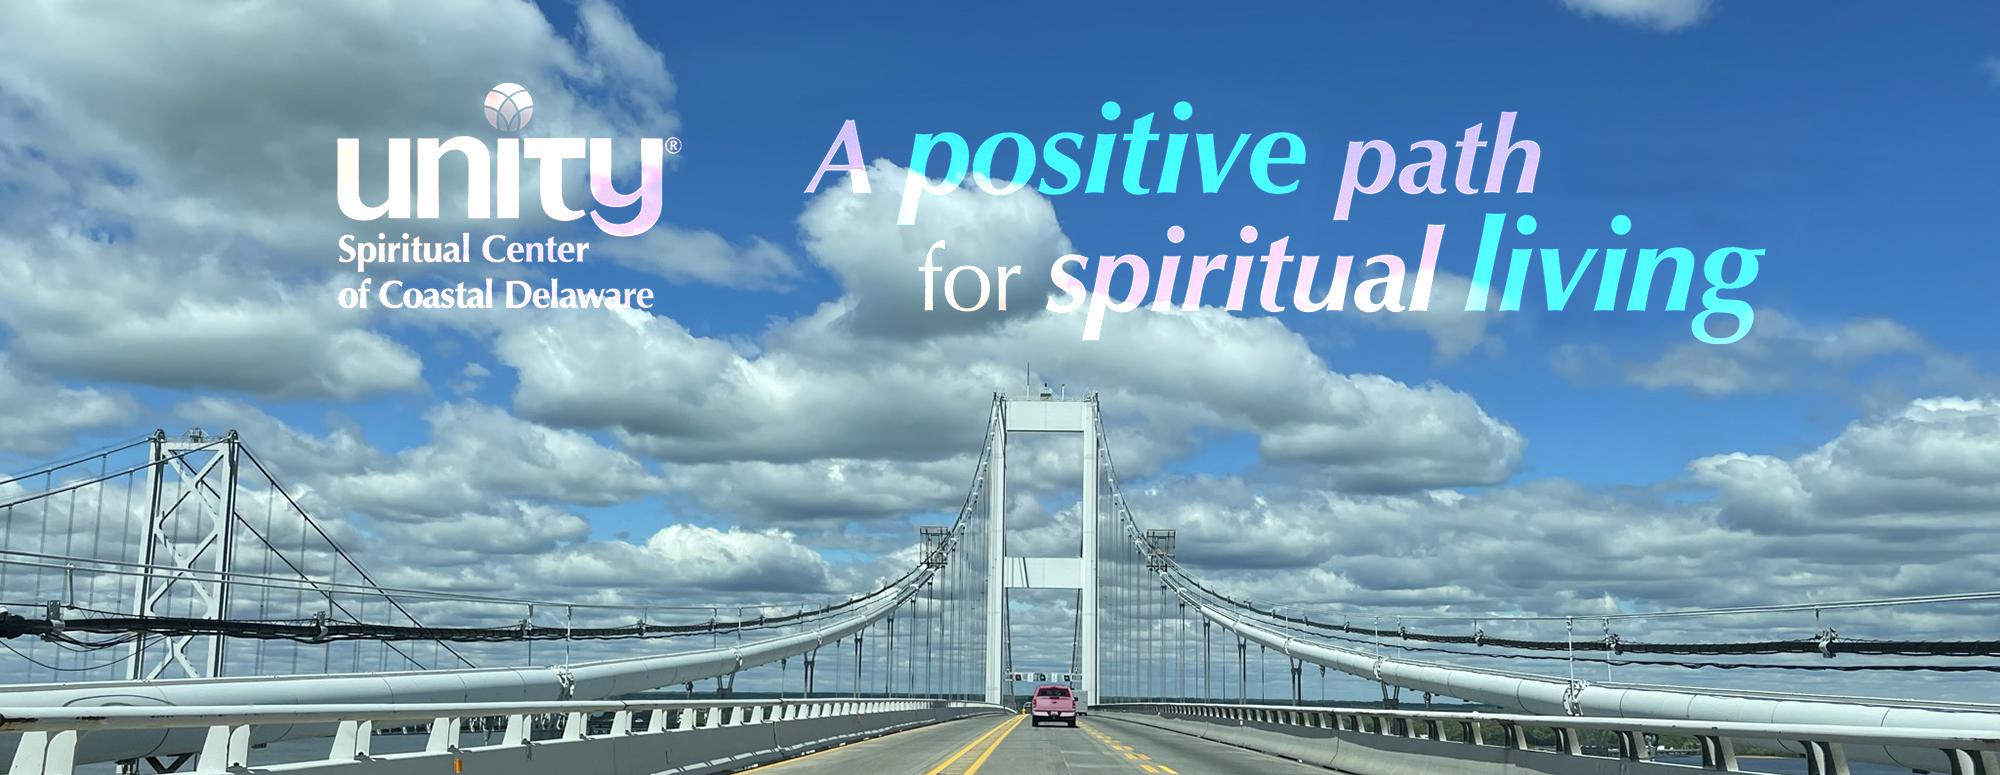 A Positive Path for Spiritual Living